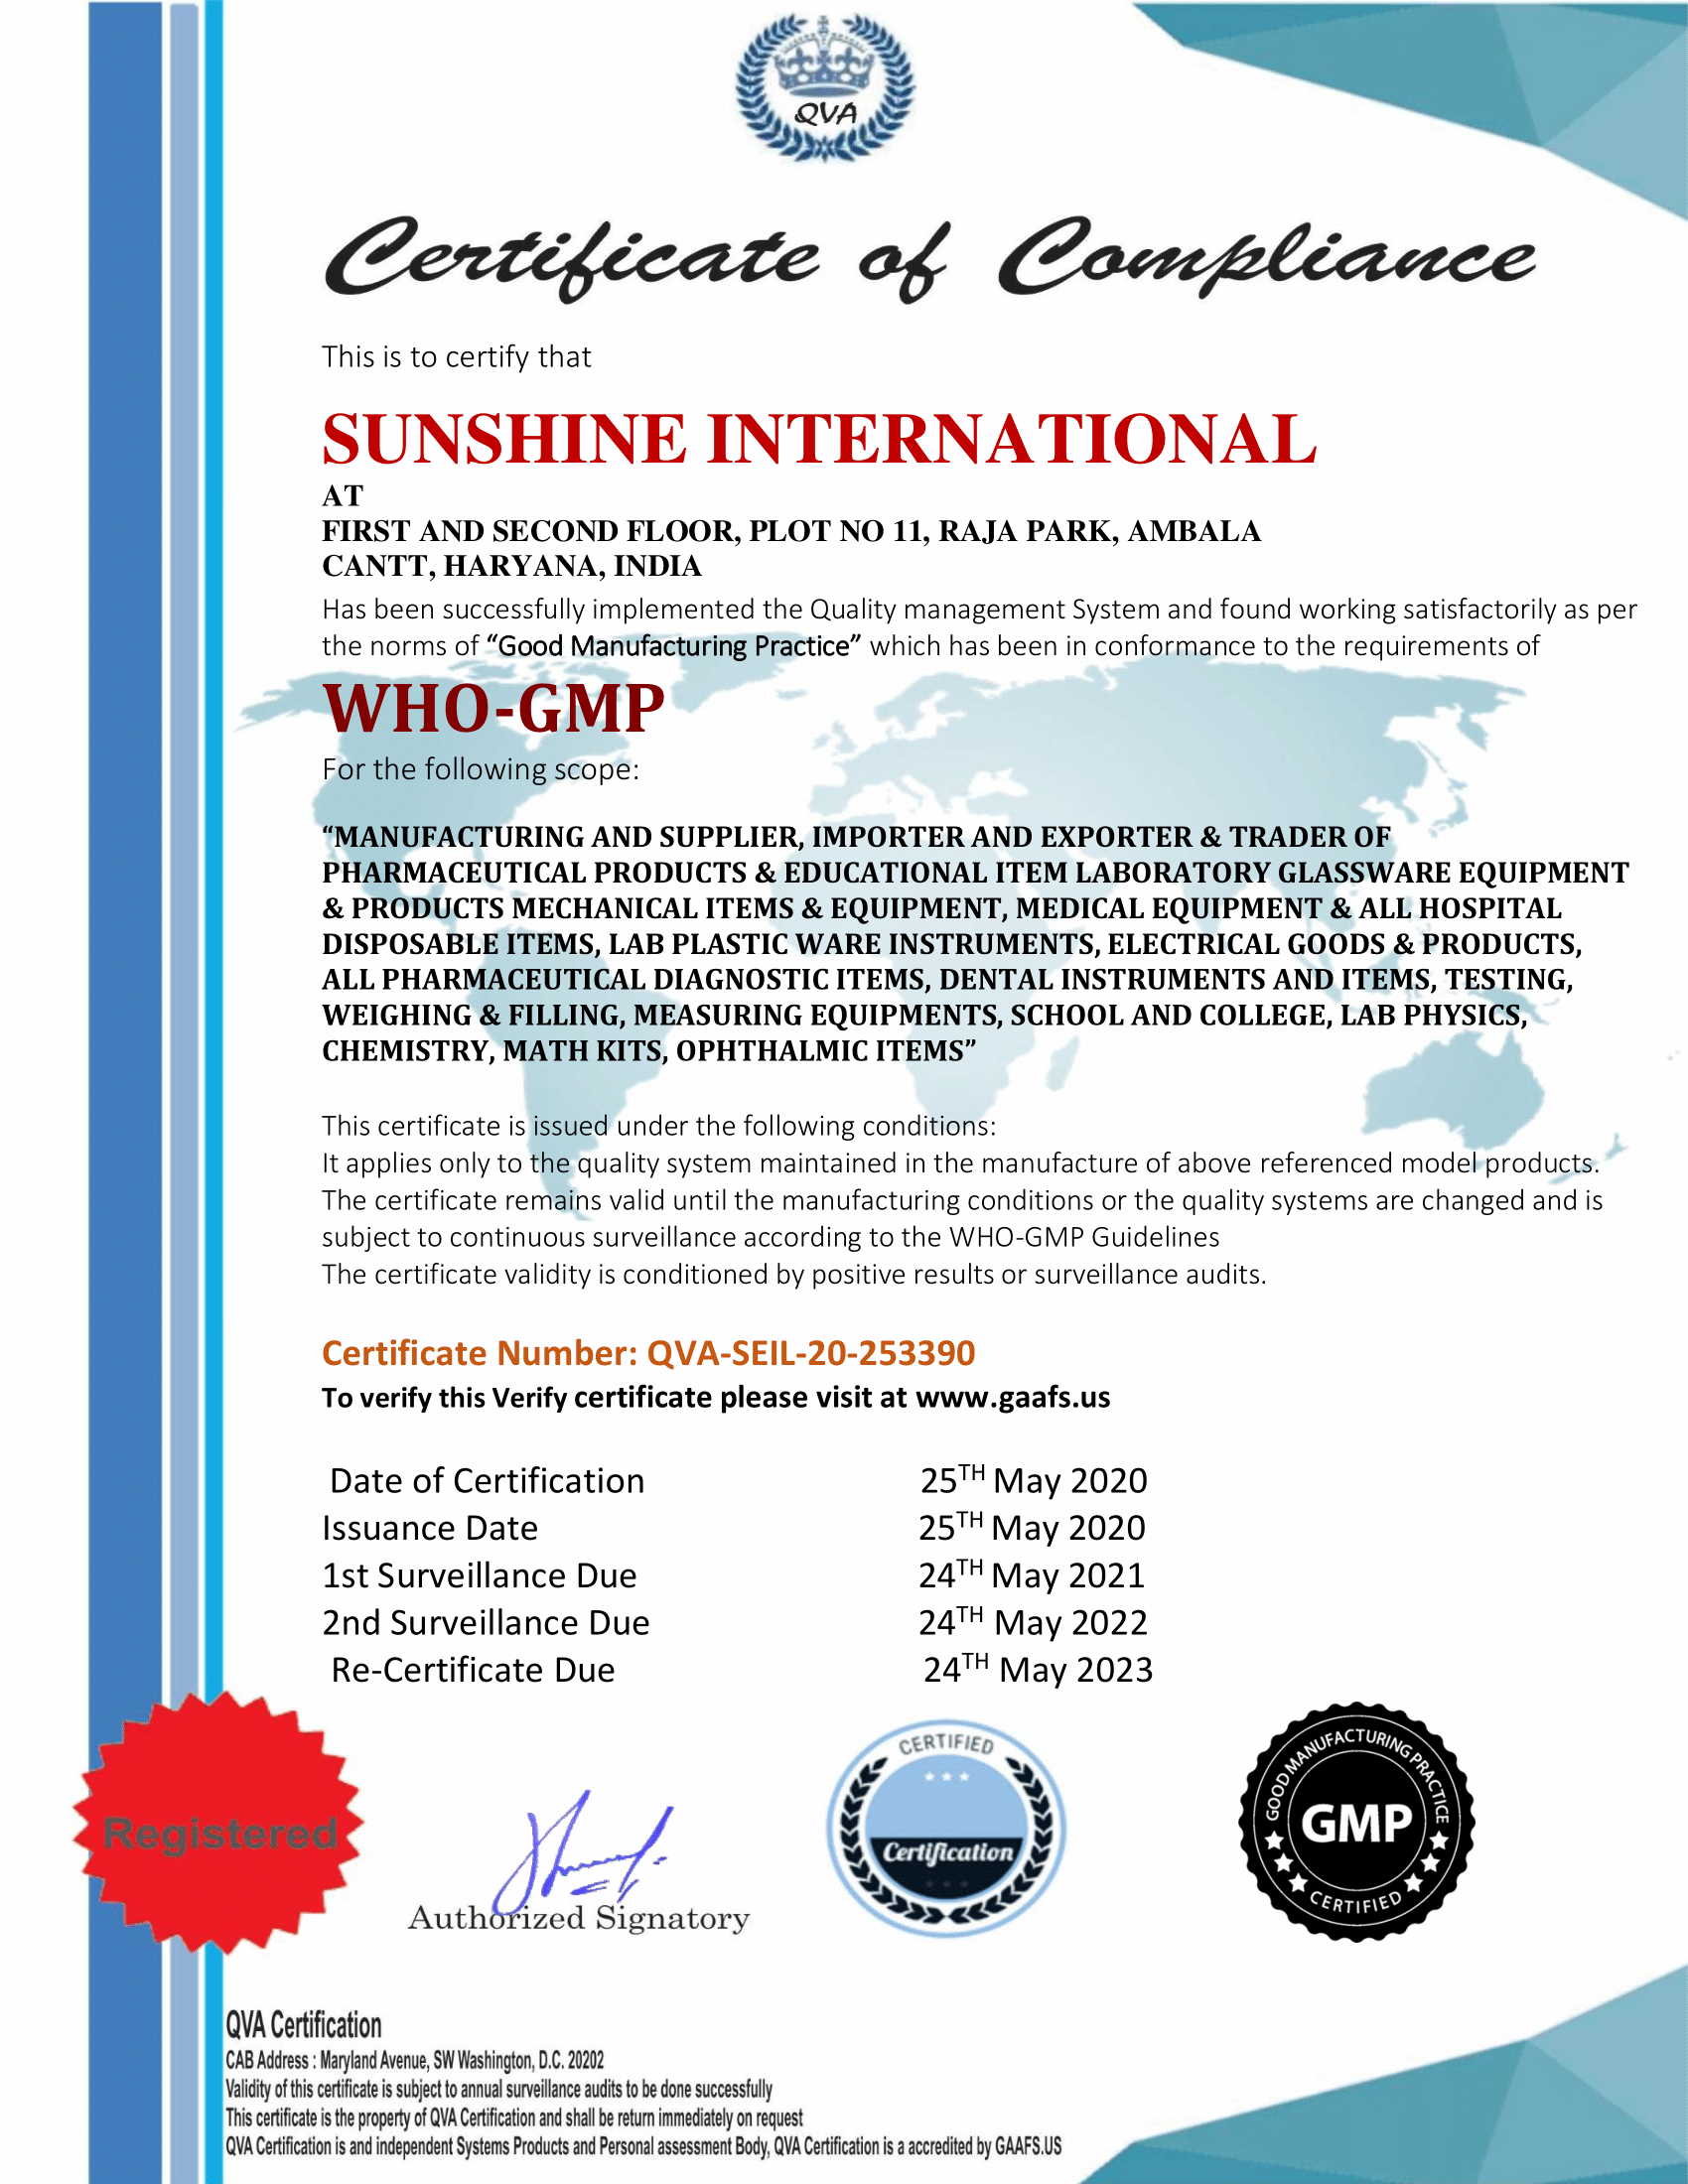 SUNSHINE INTERNATIONAL 1